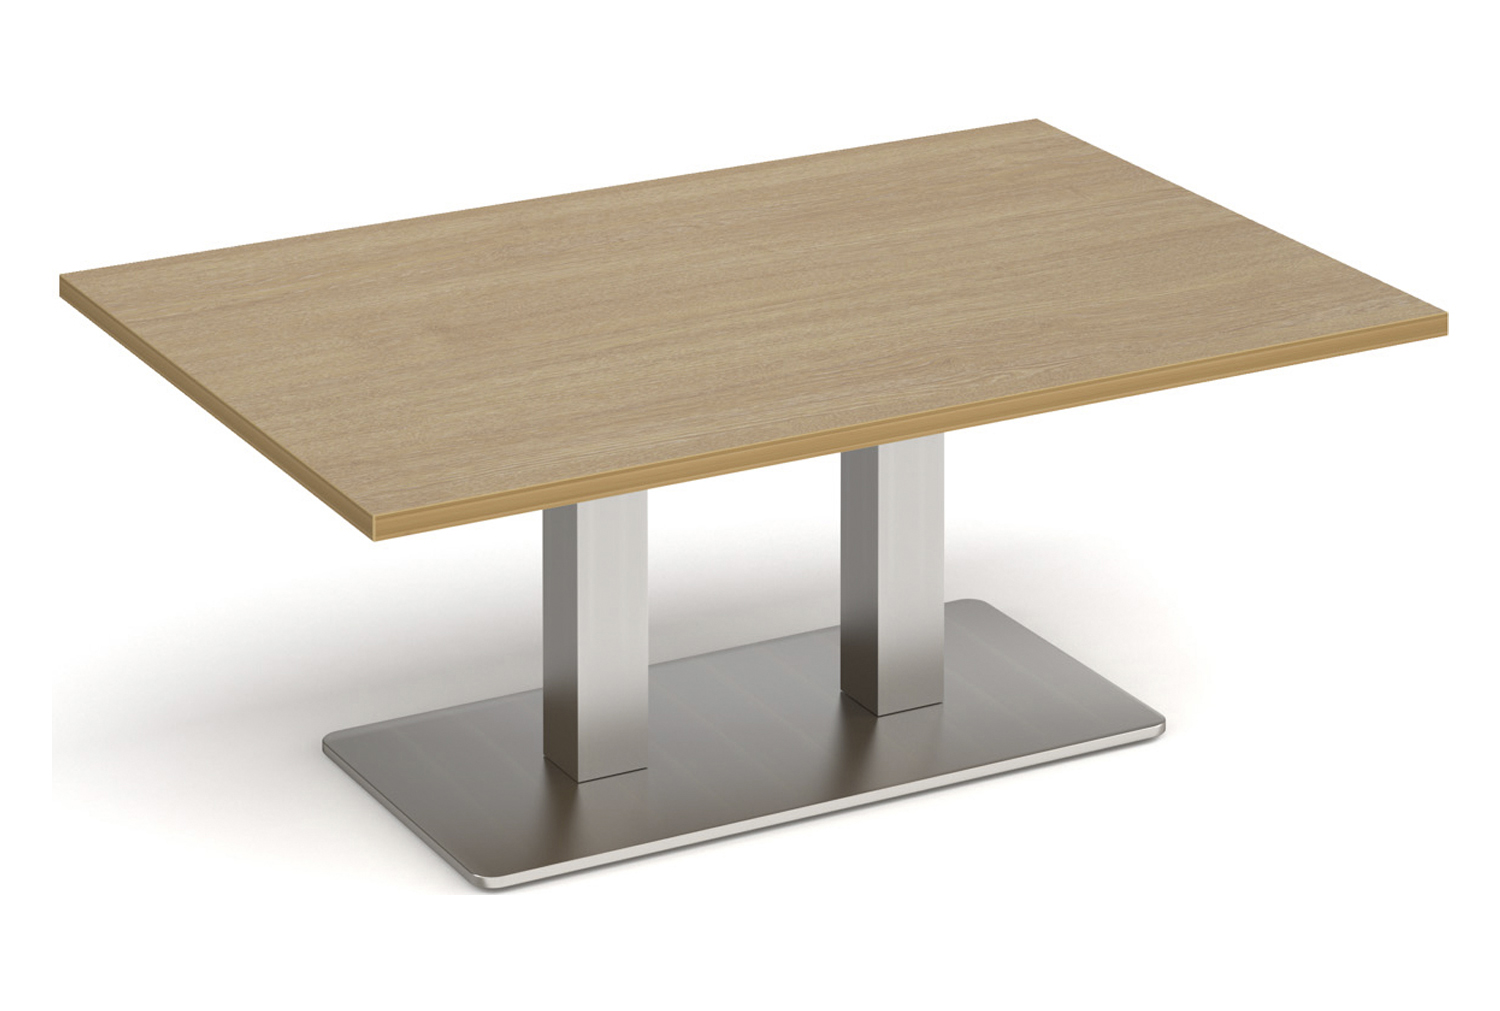 Tigris Rectangular Coffee Table, 120wx80dx49h (cm), Brushed Steel Frame, Oak